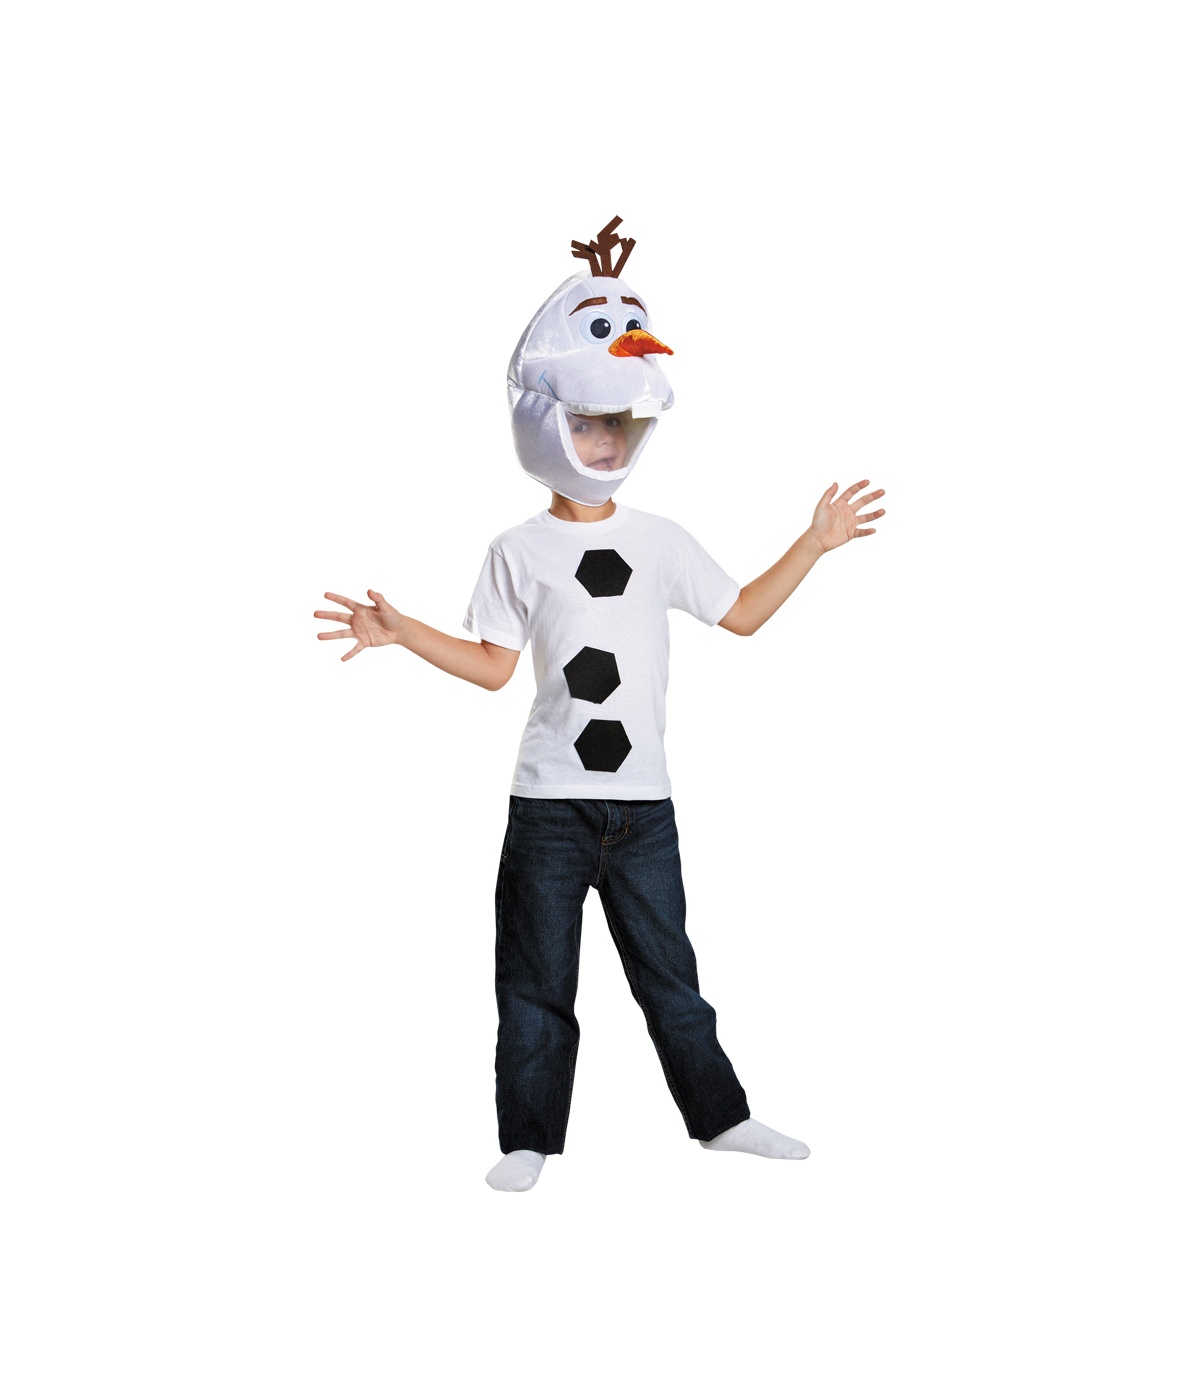  Rozen Olaf Disney Costume Kit